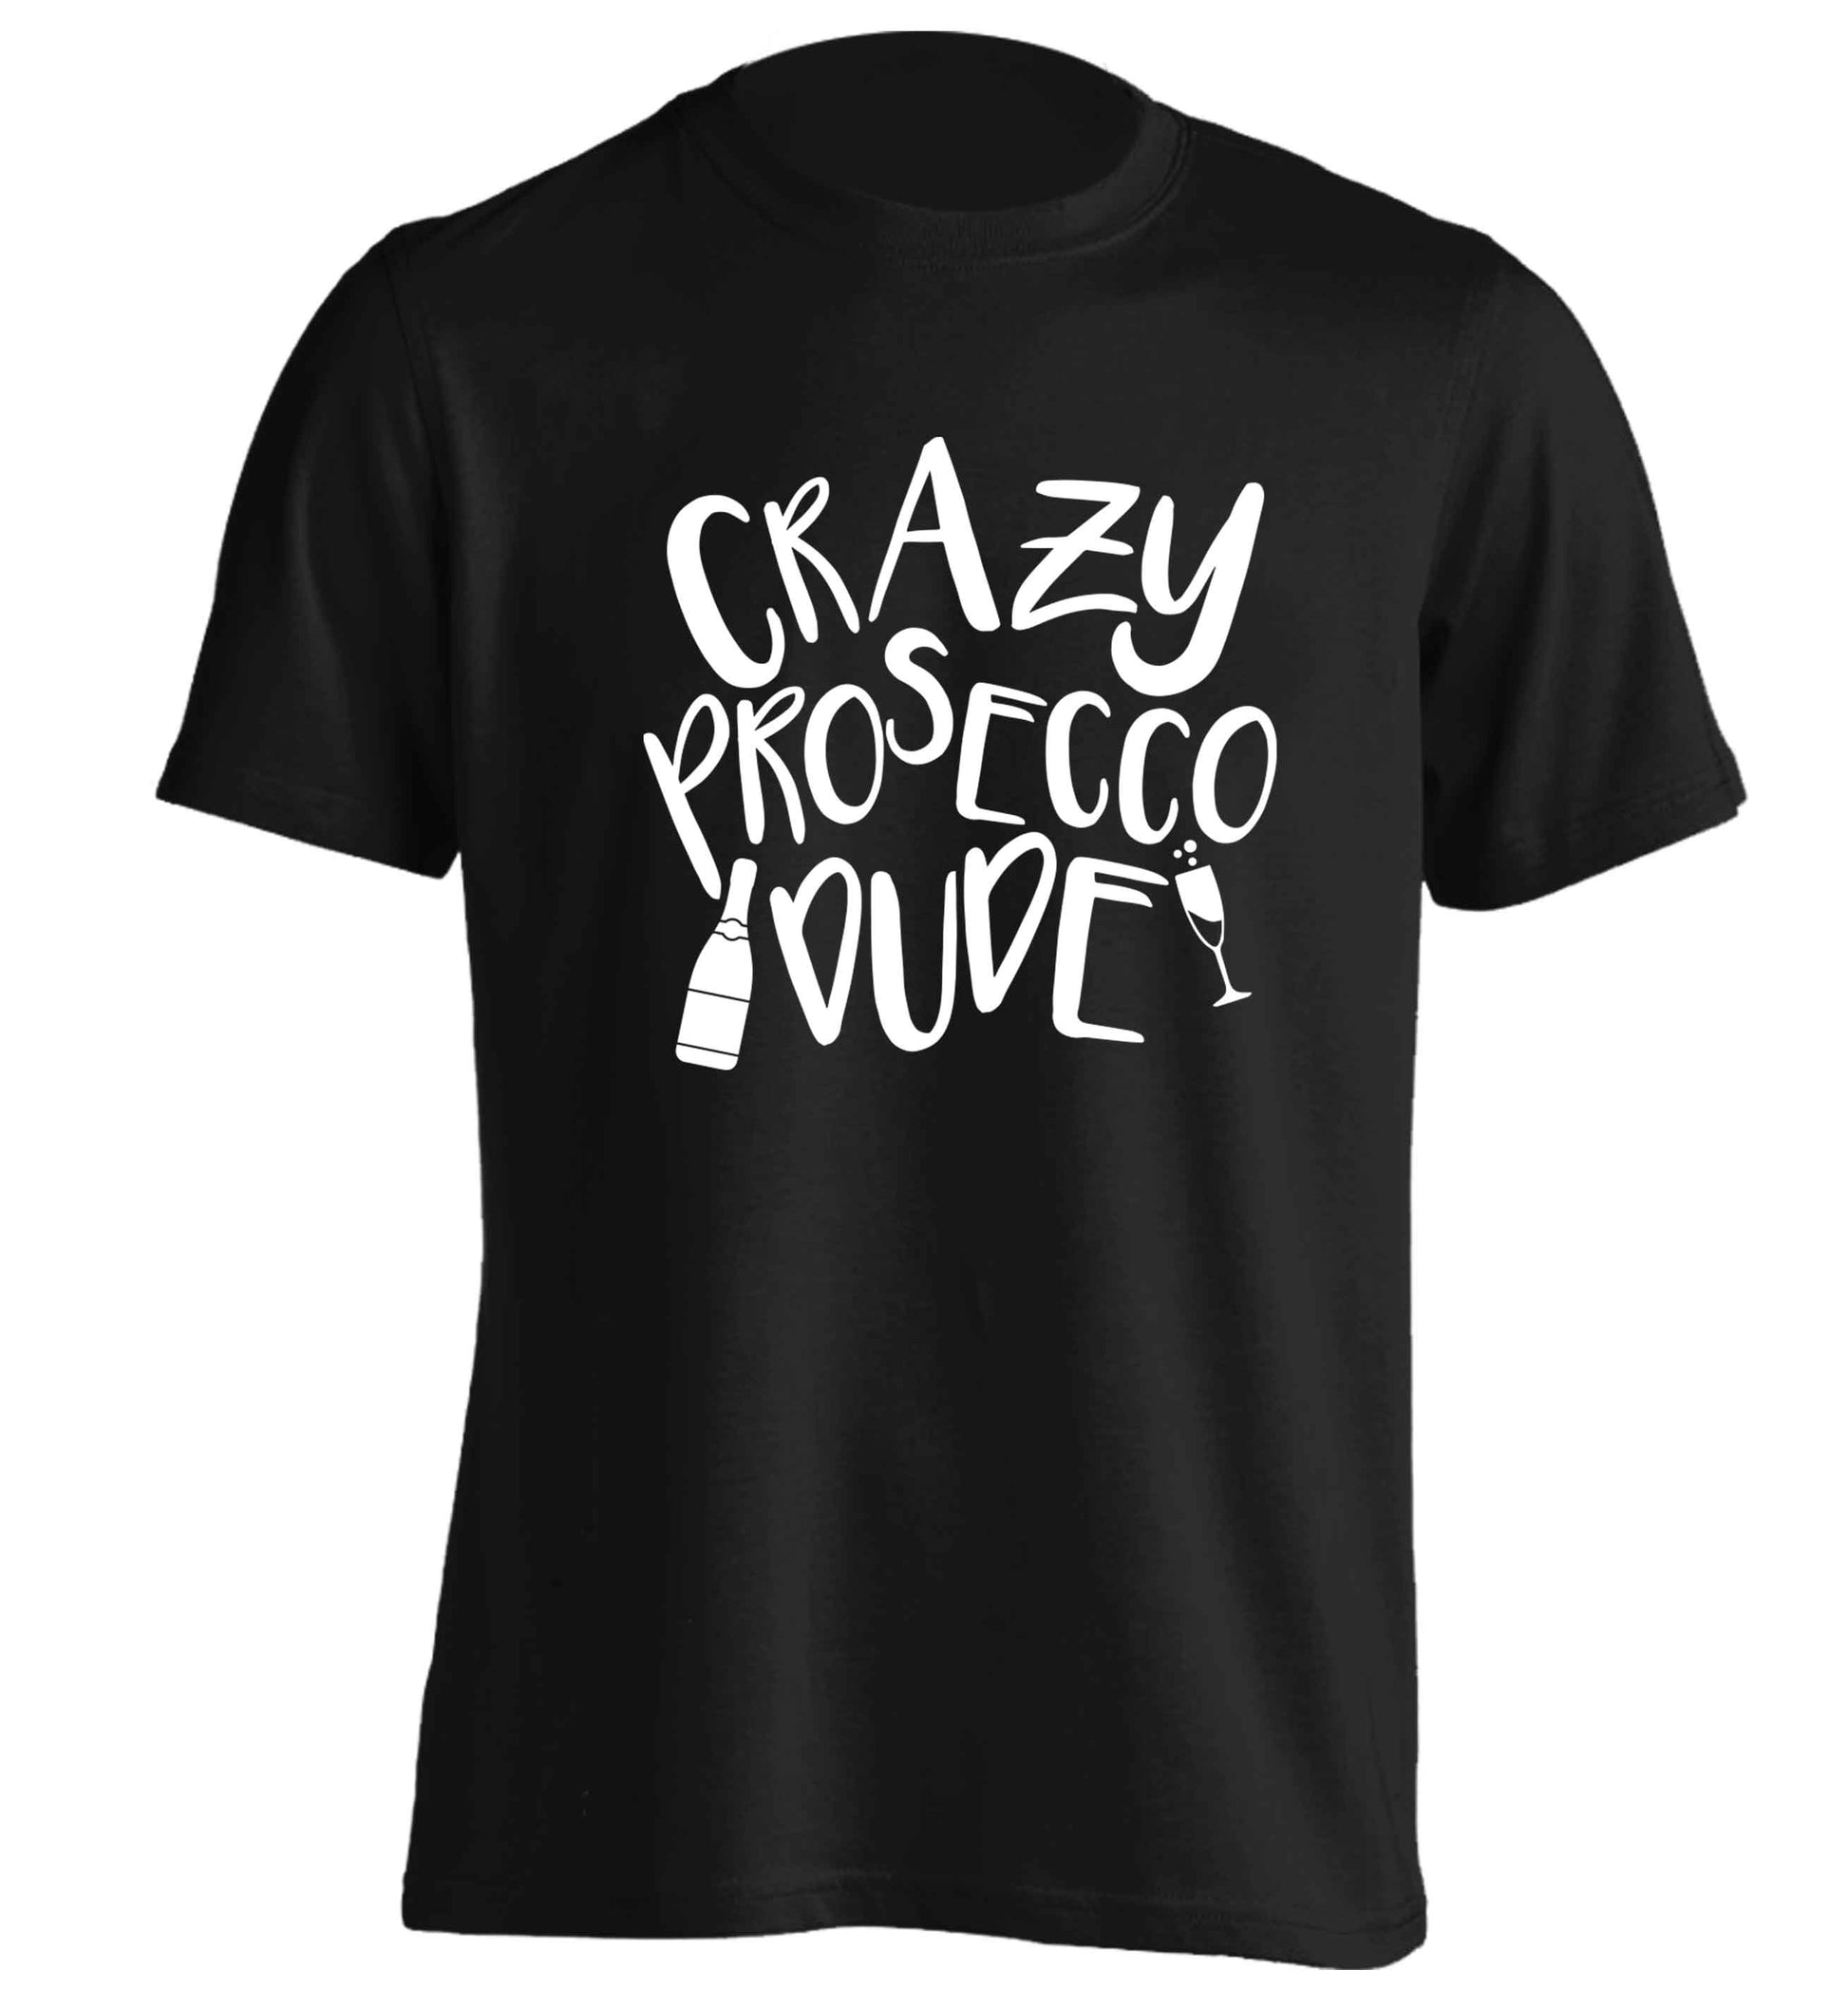 Crazy prosecco dude adults unisex black Tshirt 2XL